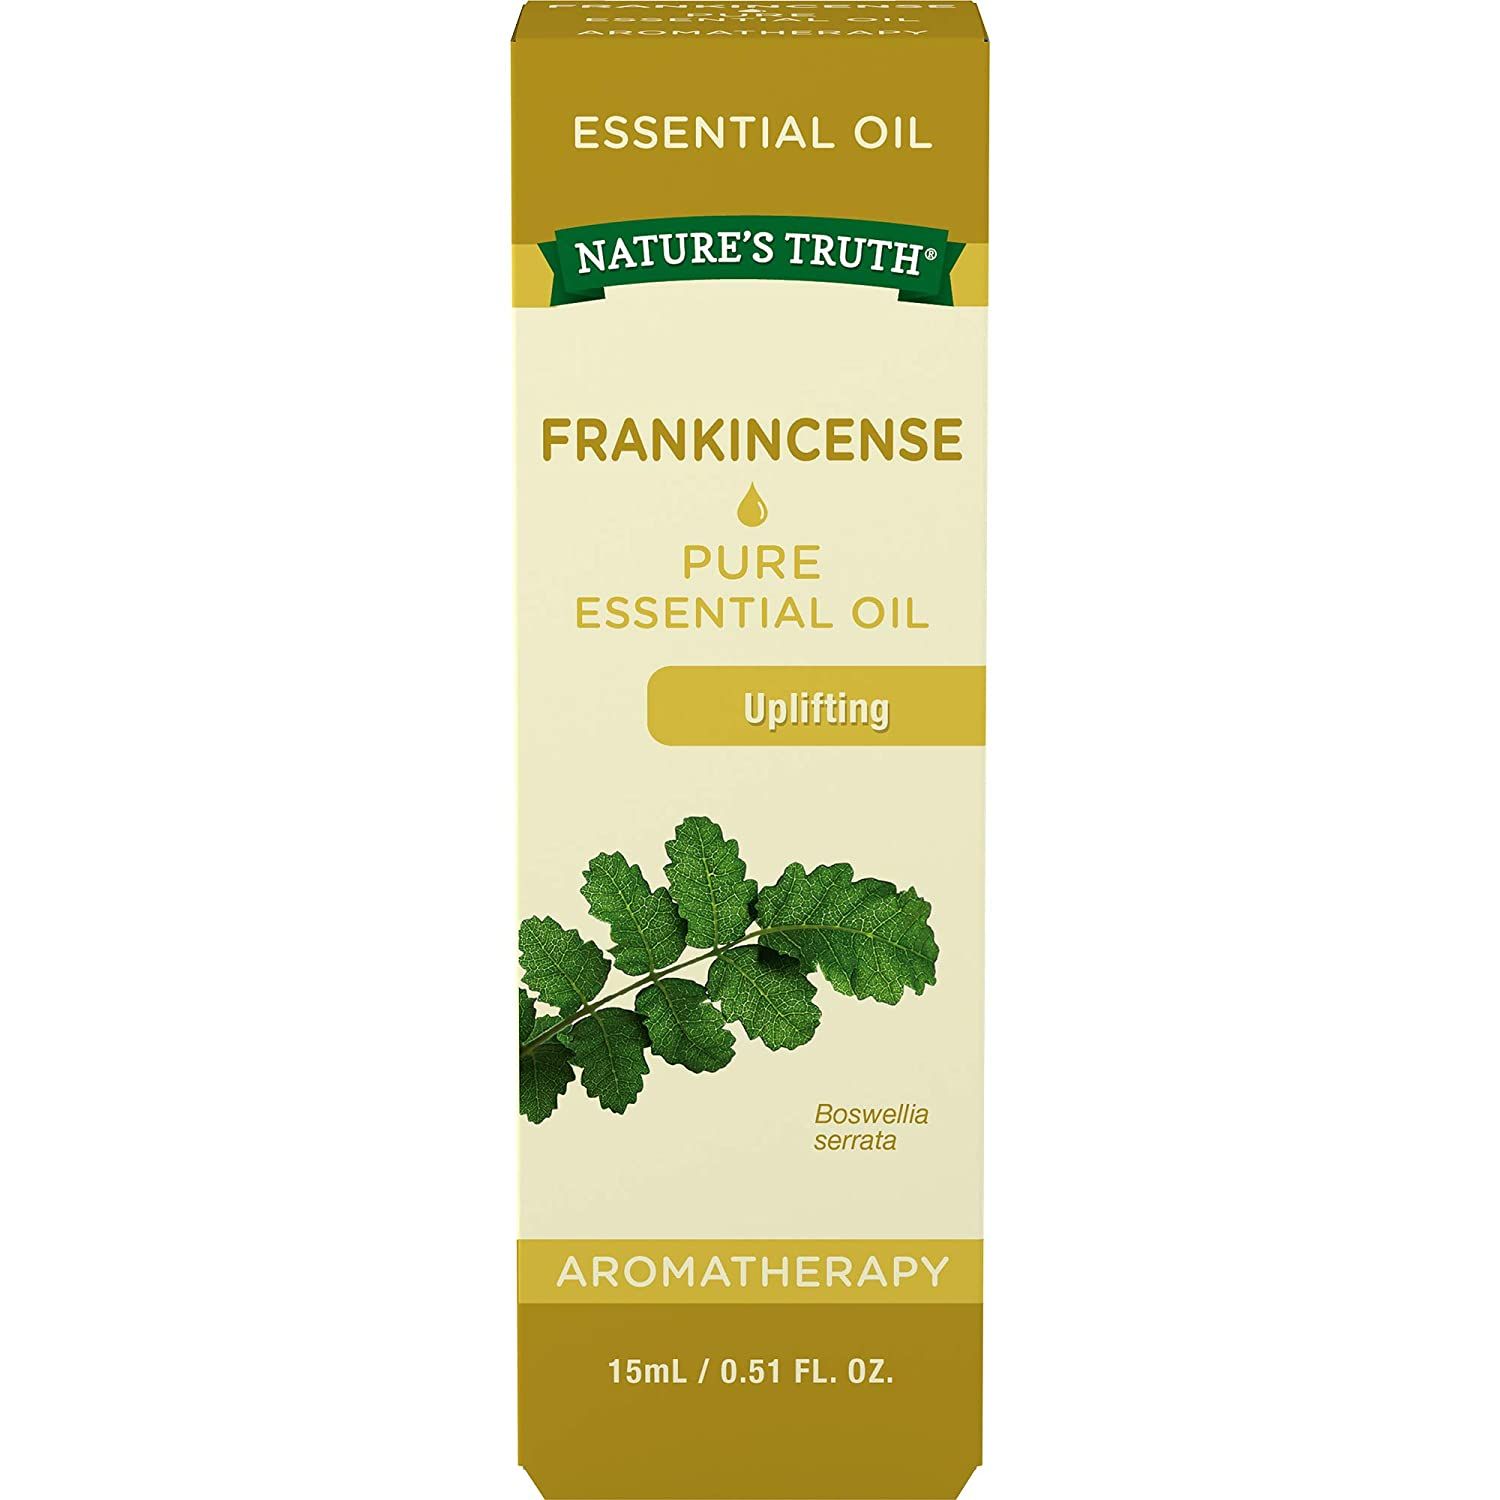 DISCNature's Truth Aromatherapy Essential Oil, Frankincense - 0.51 fl oz